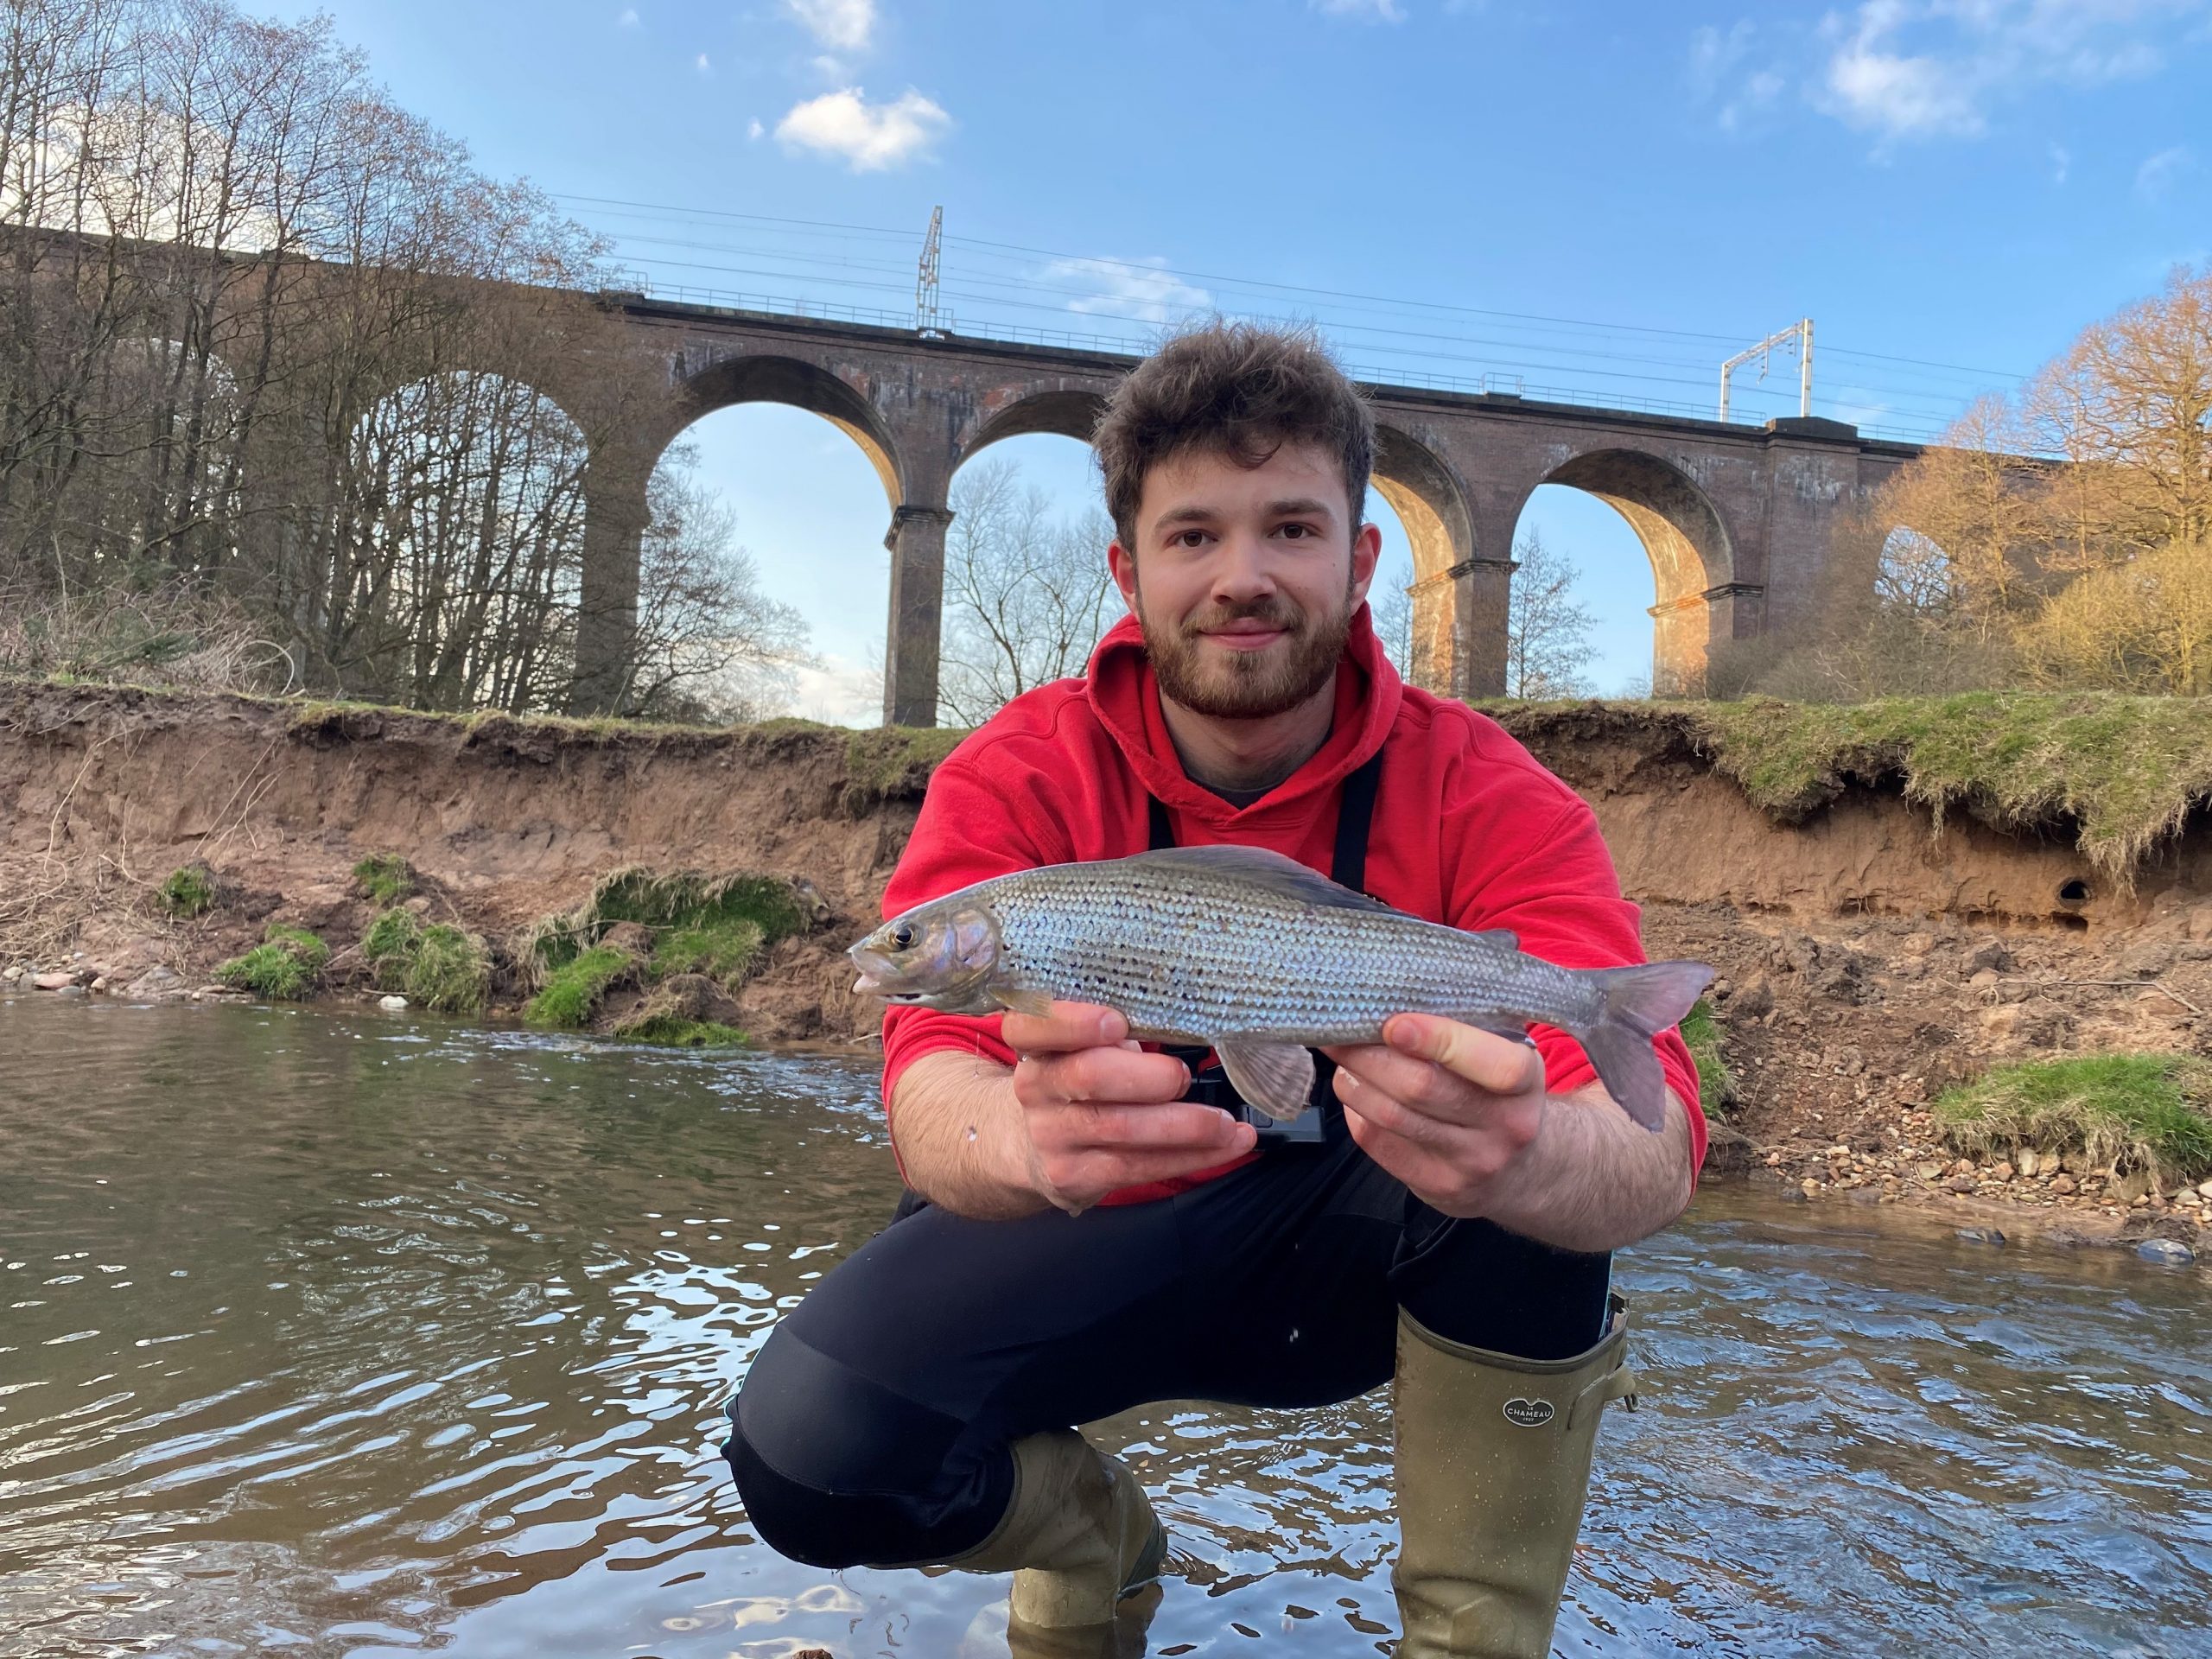 George Lamb from Adventure Fishing UK – FishBuddy